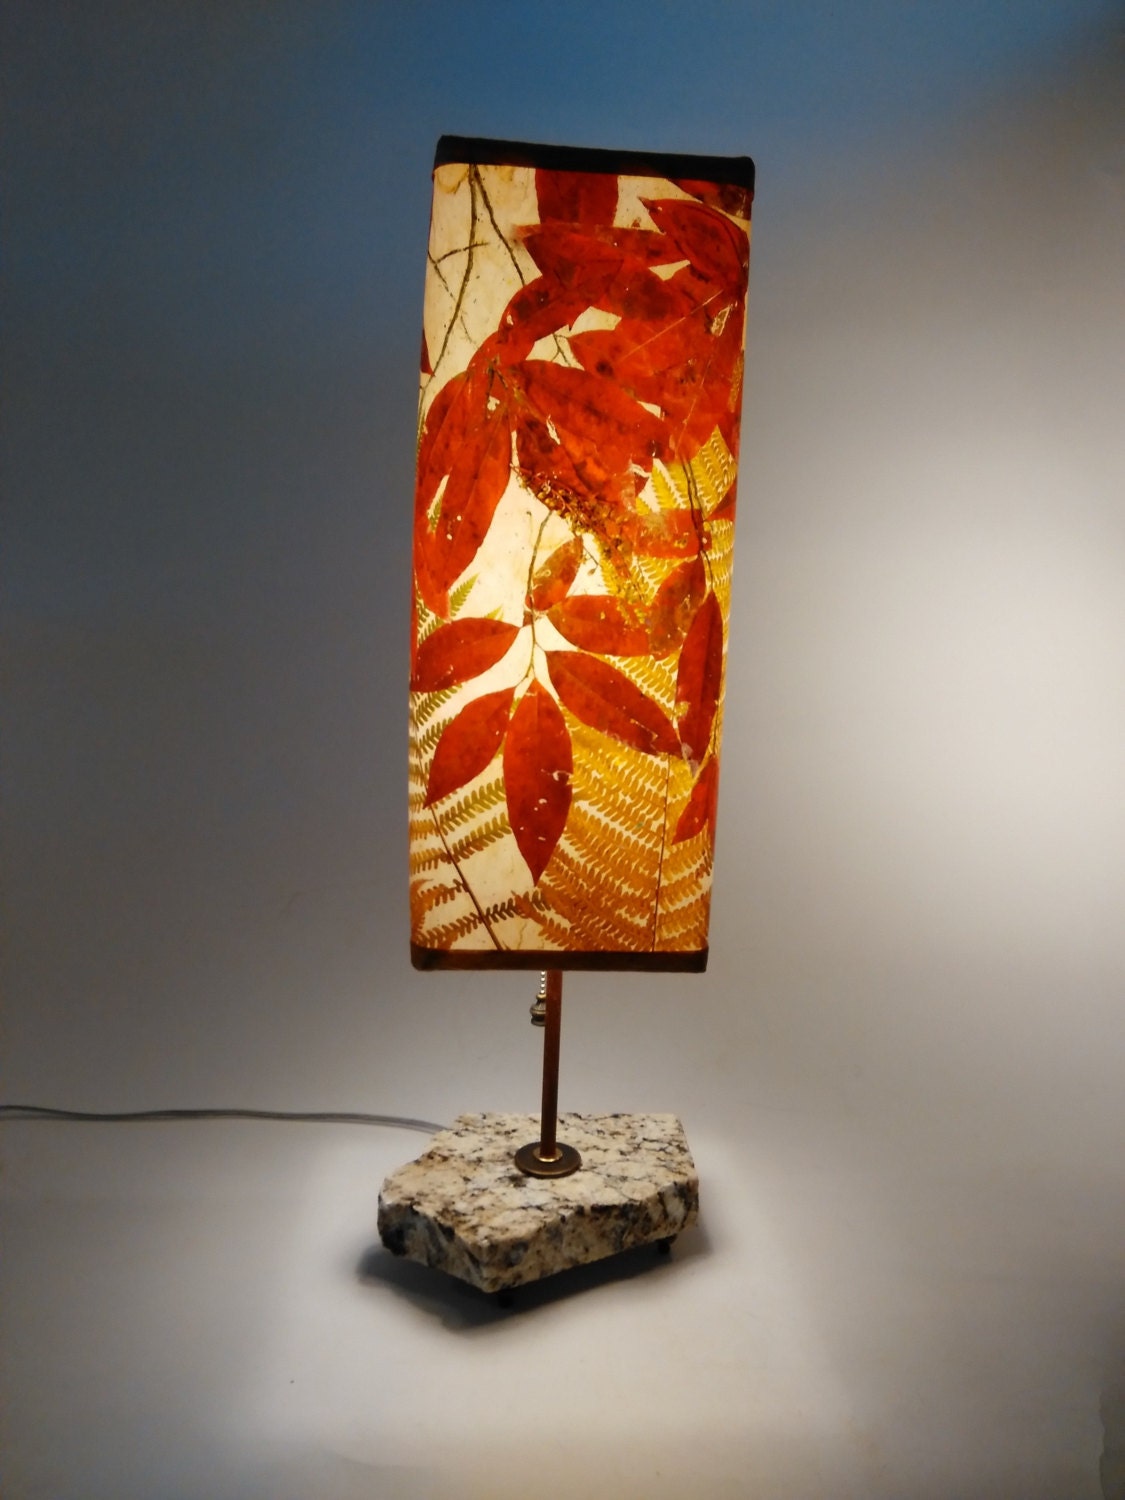 Handmade Lamps